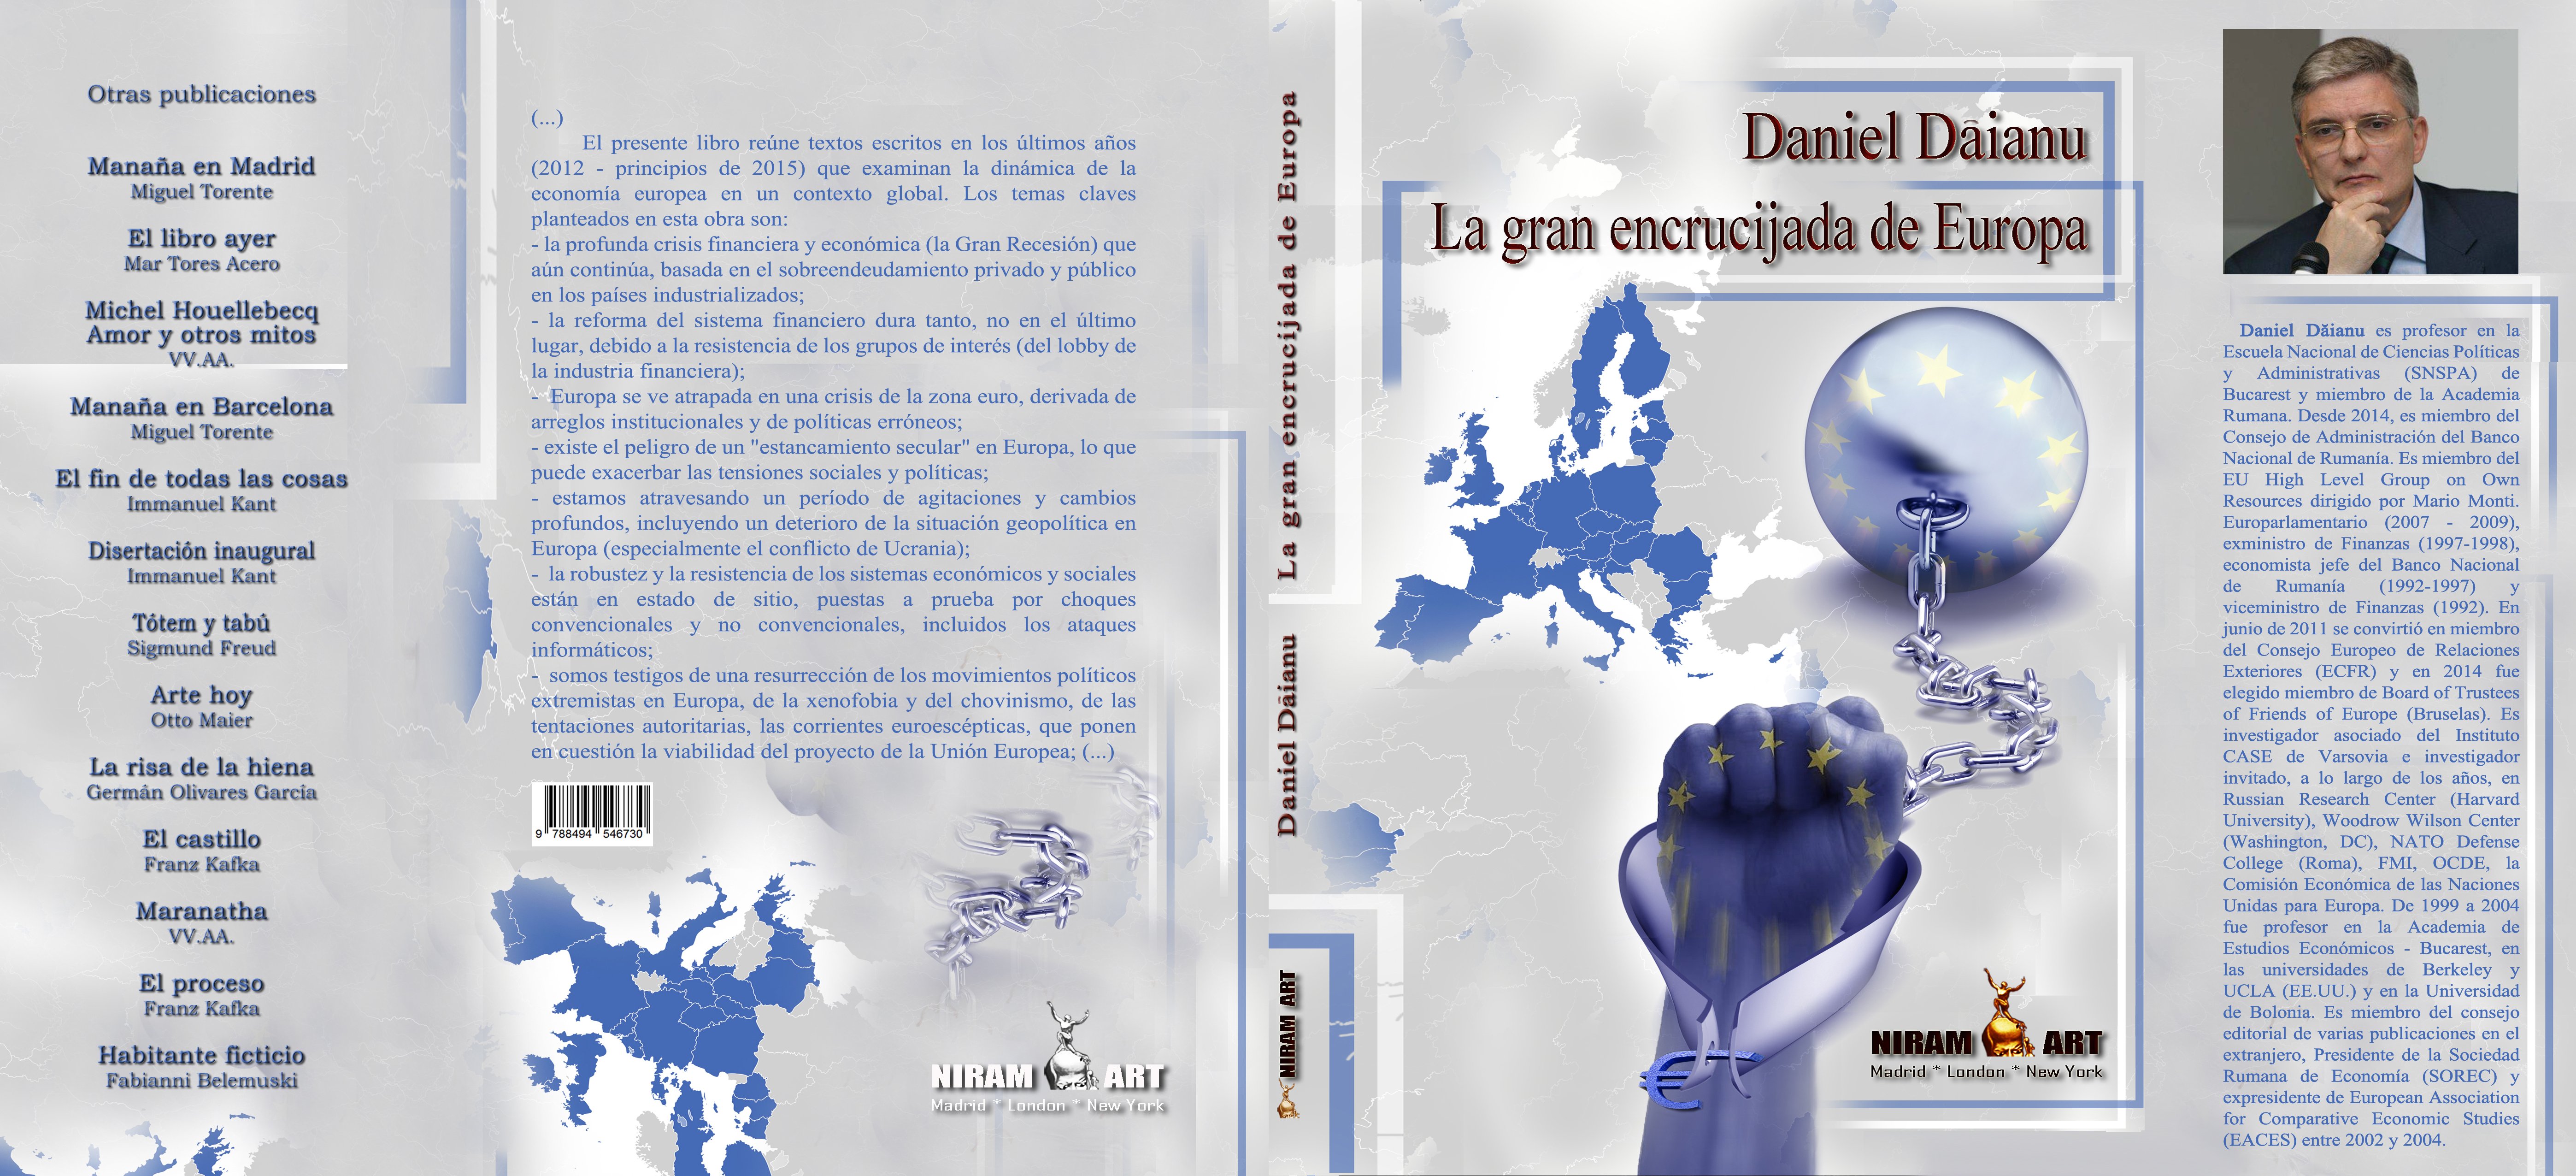 http://revista22.ro/files/news/manset/default/Portada-La-gran-encrucijada-de-Europa---Daniel-Daianu.jpg